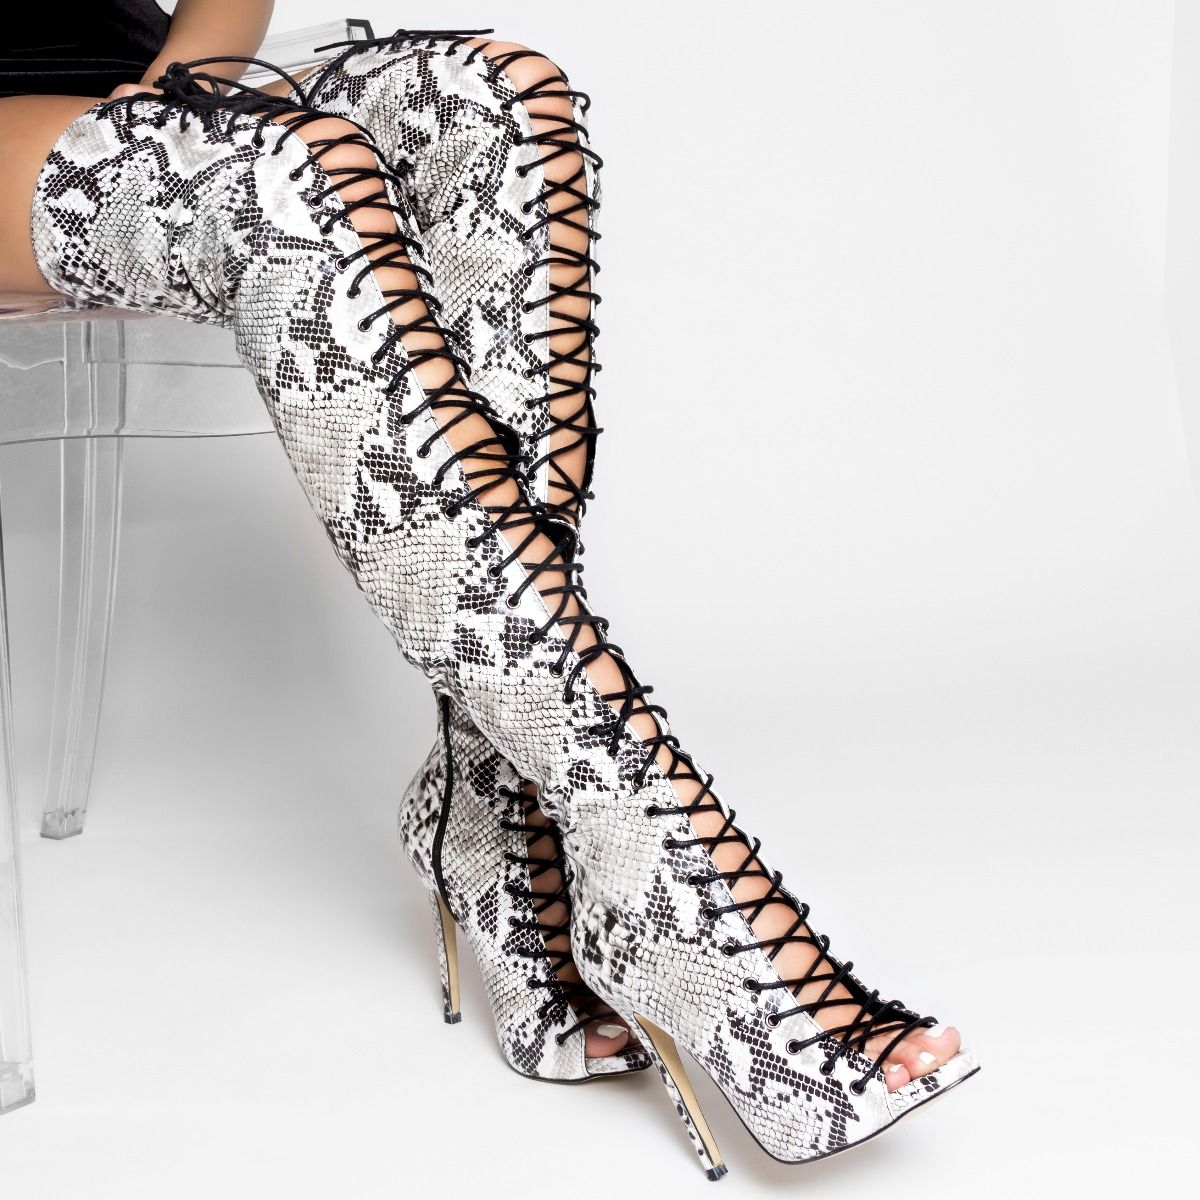 thigh high lace up stilettos